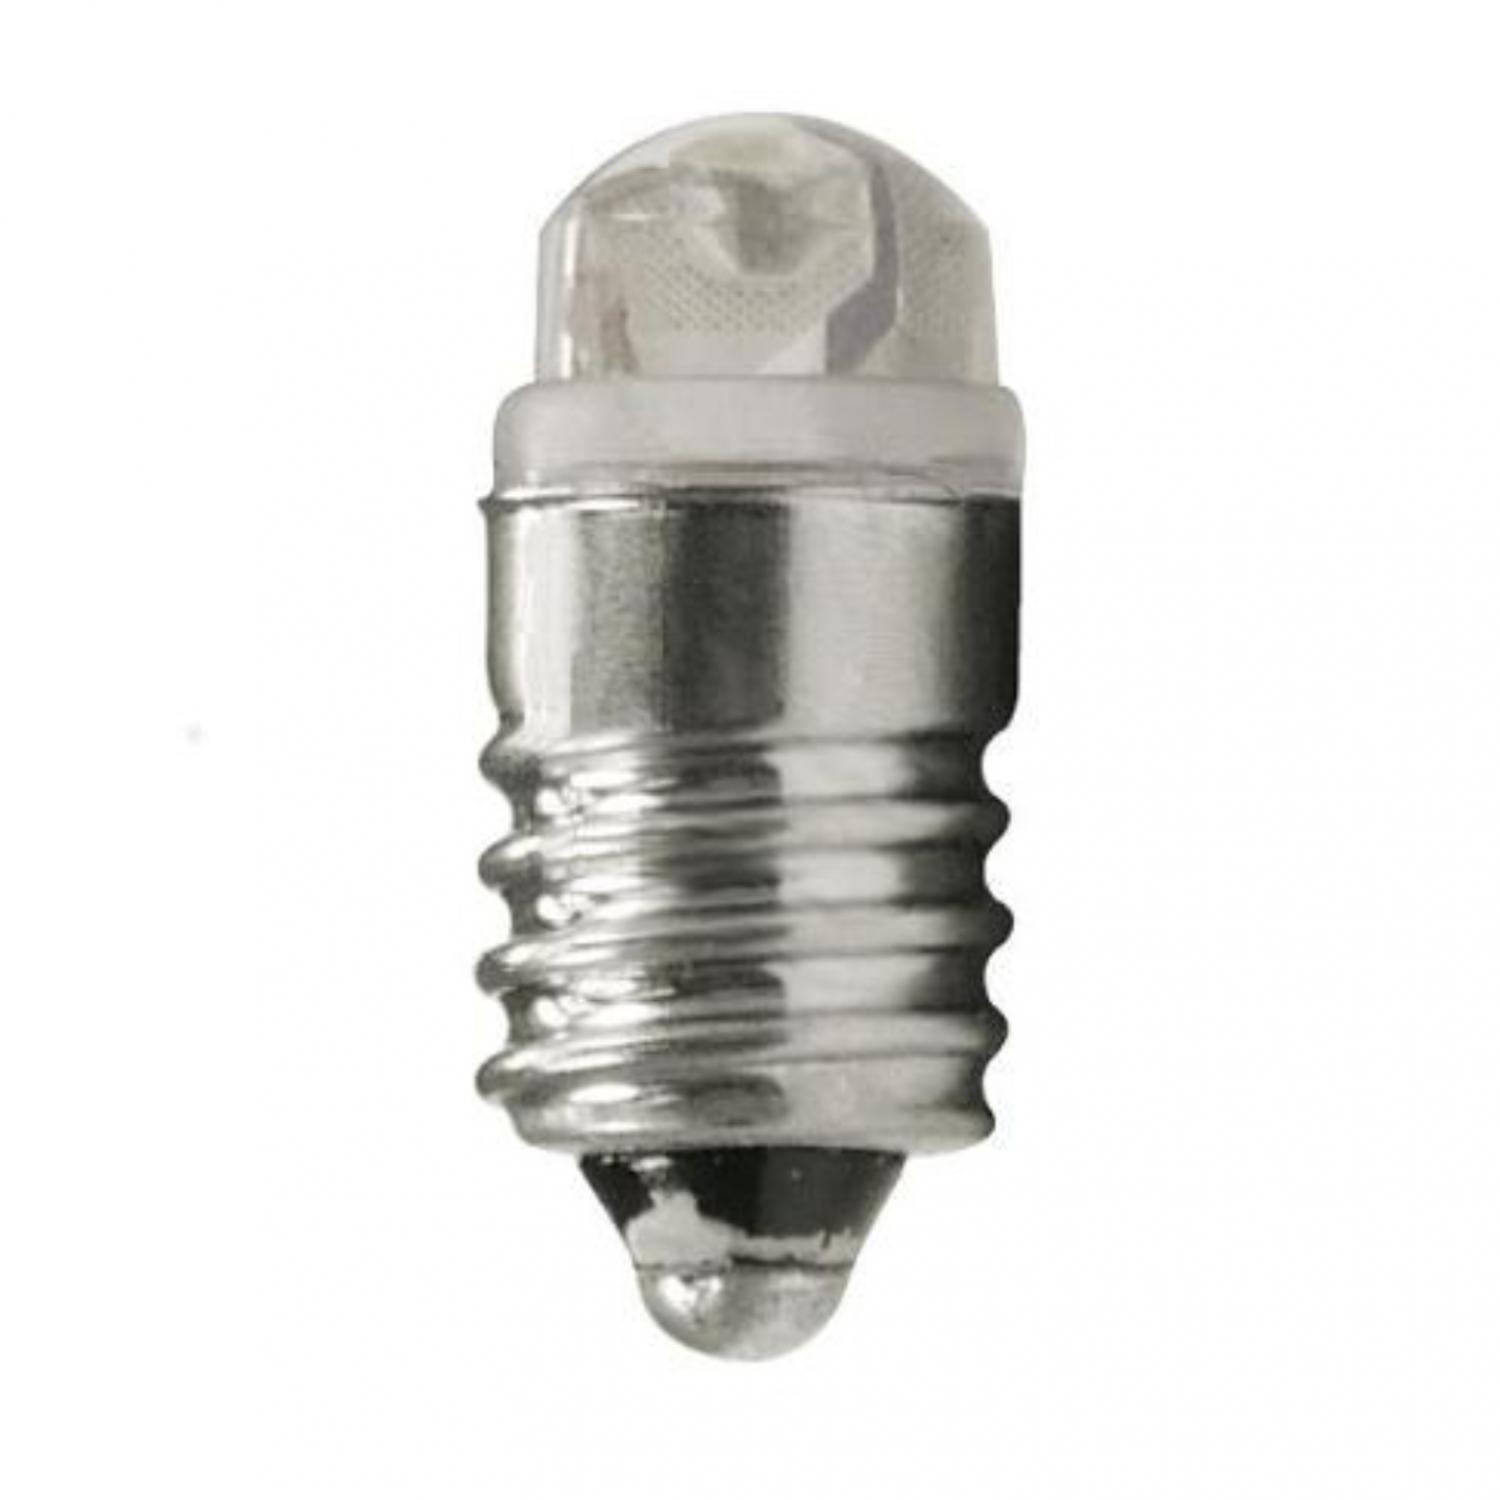 ingenieur Melodramatisch Afwijking E10 Lamp E10 Fitting Winkel: Bestel goedkoop uw E10 Fitting